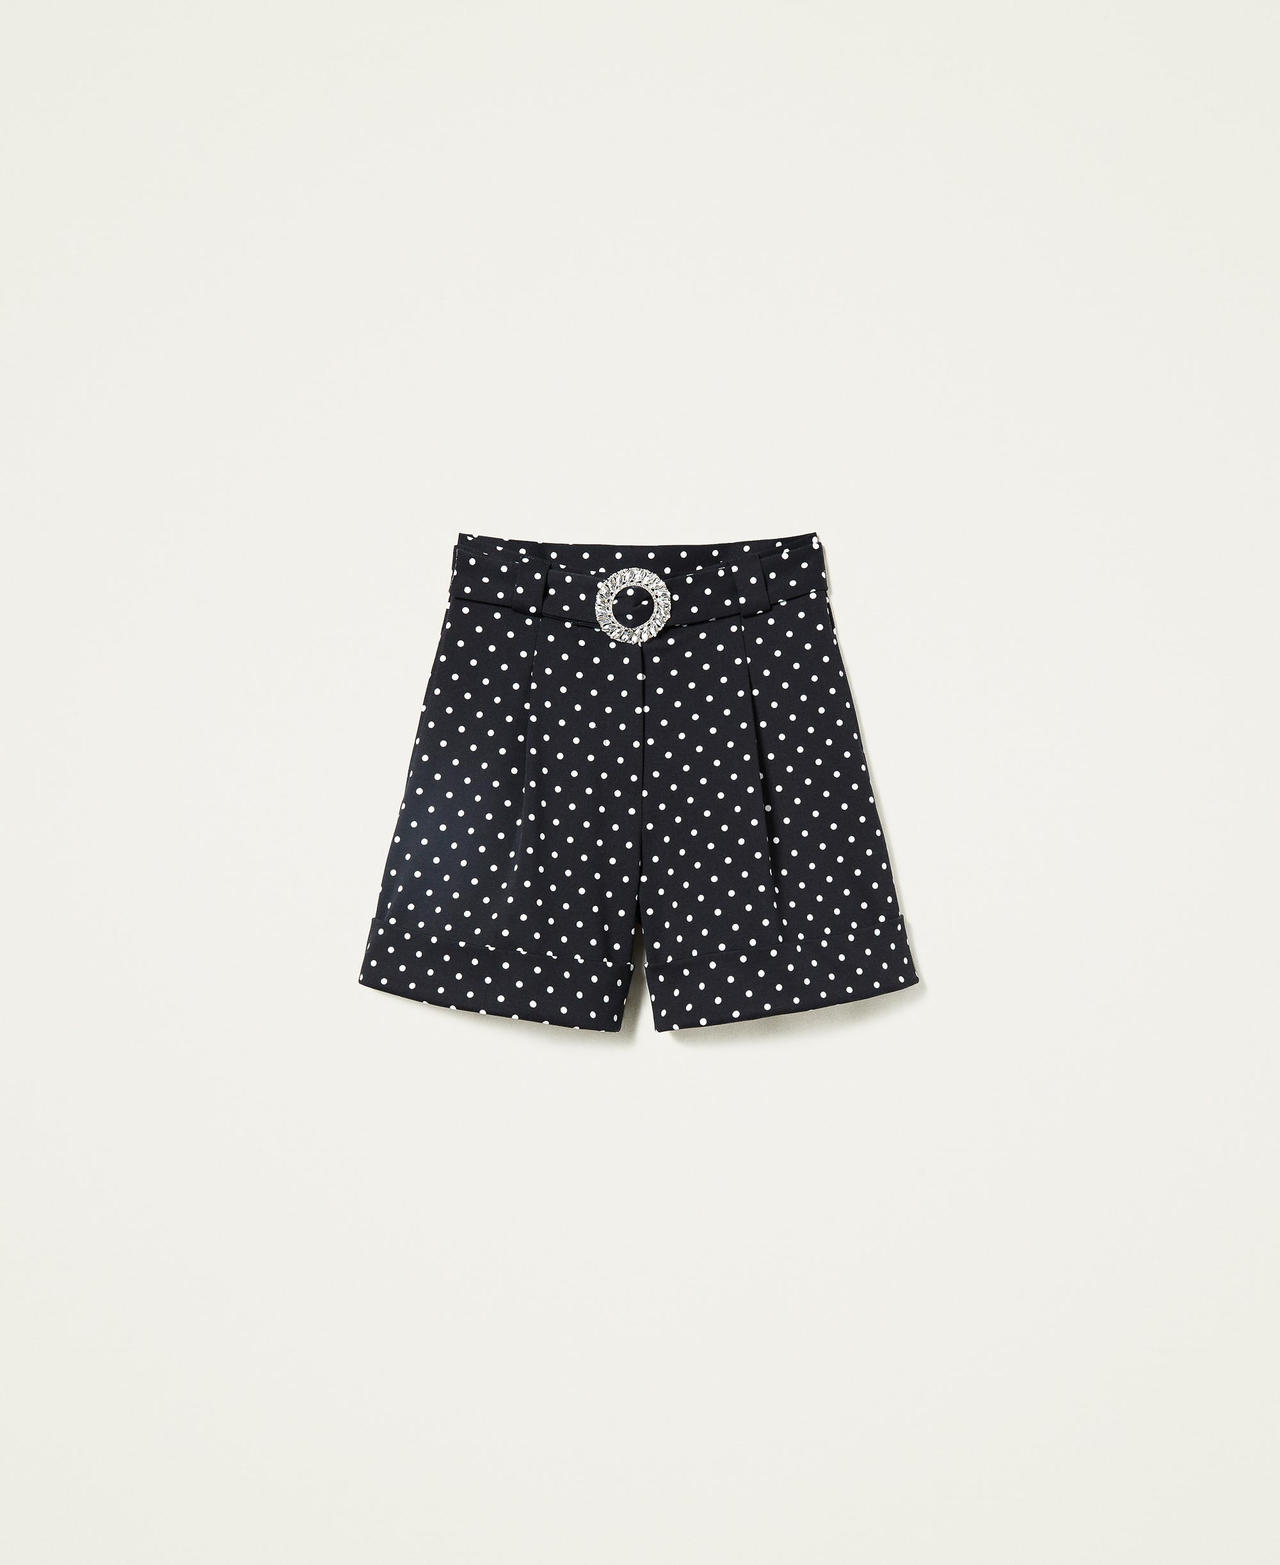 Polka dot shorts with belt Two-tone Lily / Black Polka Dots Woman 222AP2111-0S